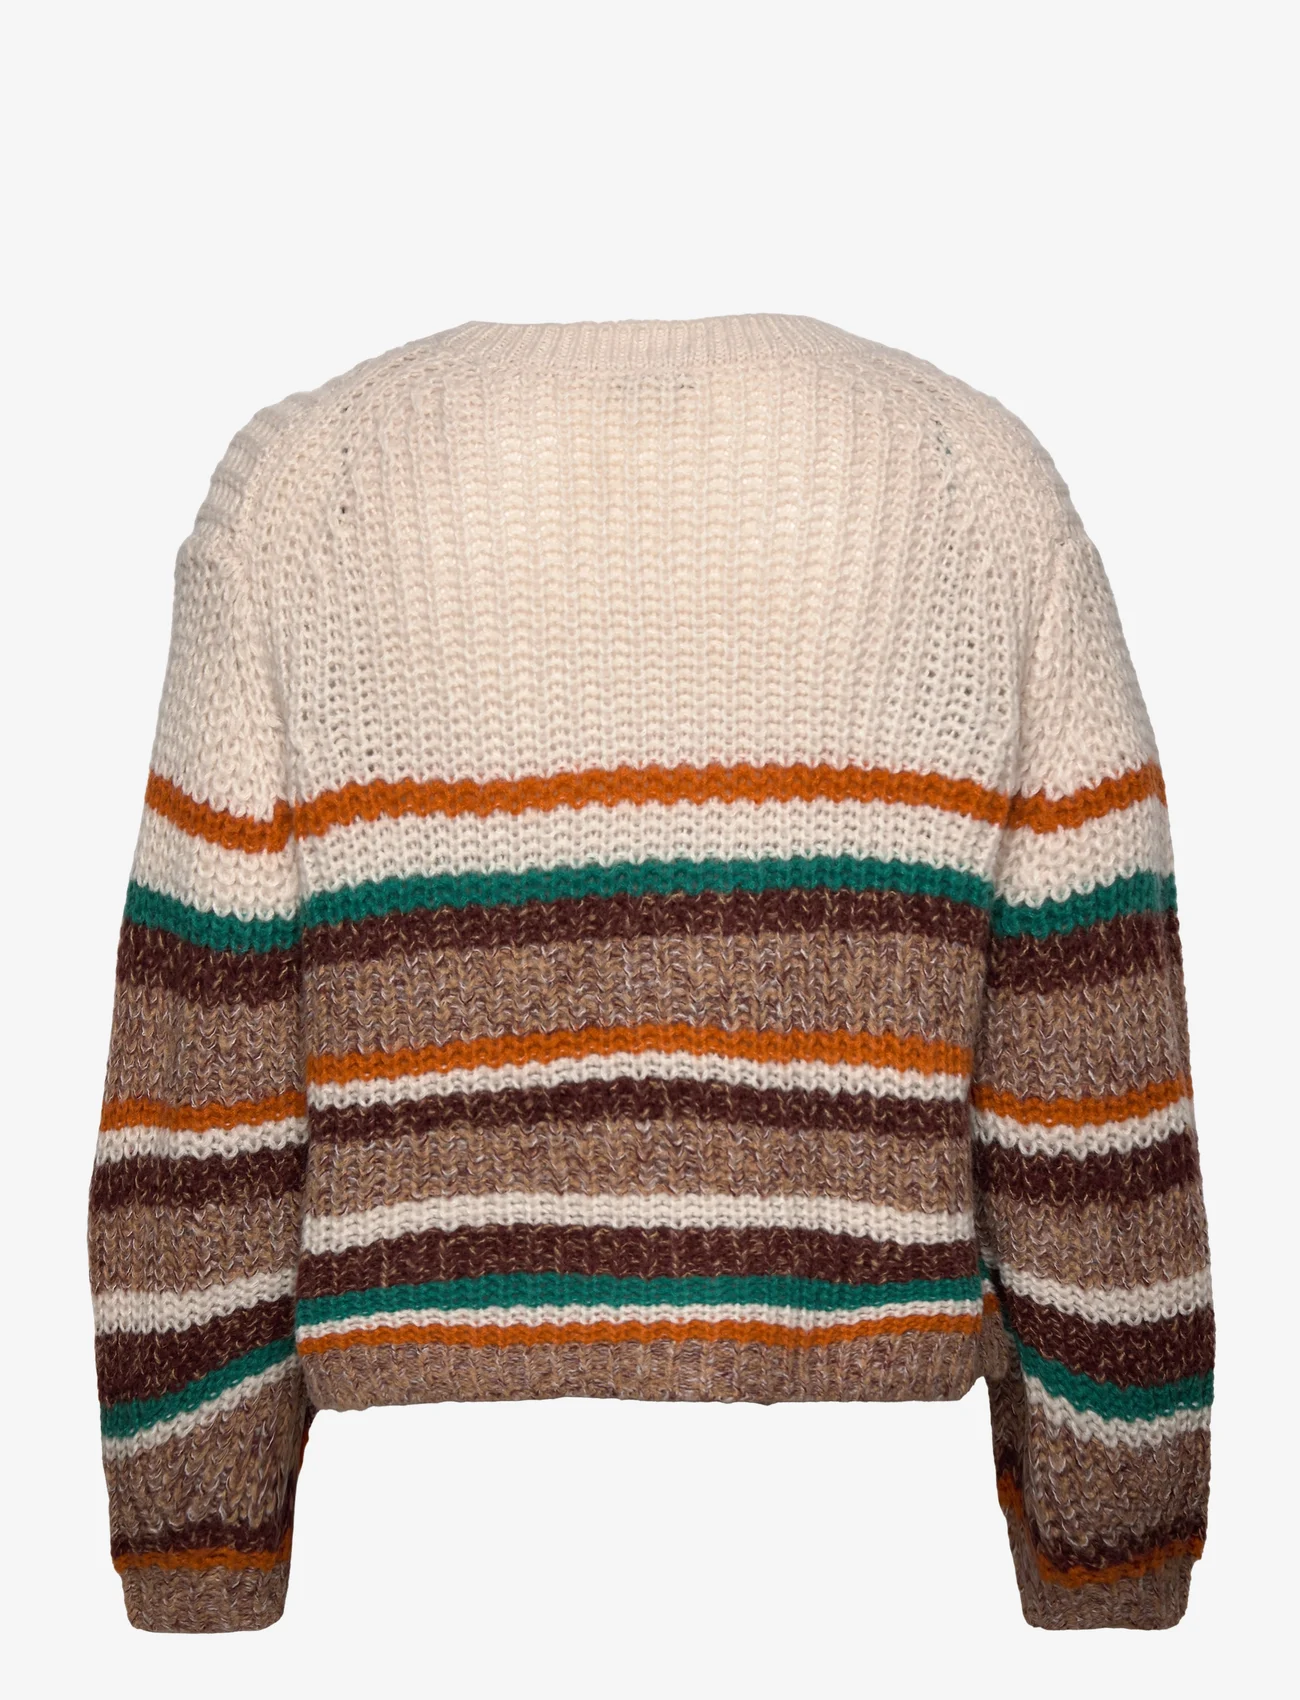 Tom Tailor - Knit colored stripe pullover - jumpers - blush multicolor stripe - 1